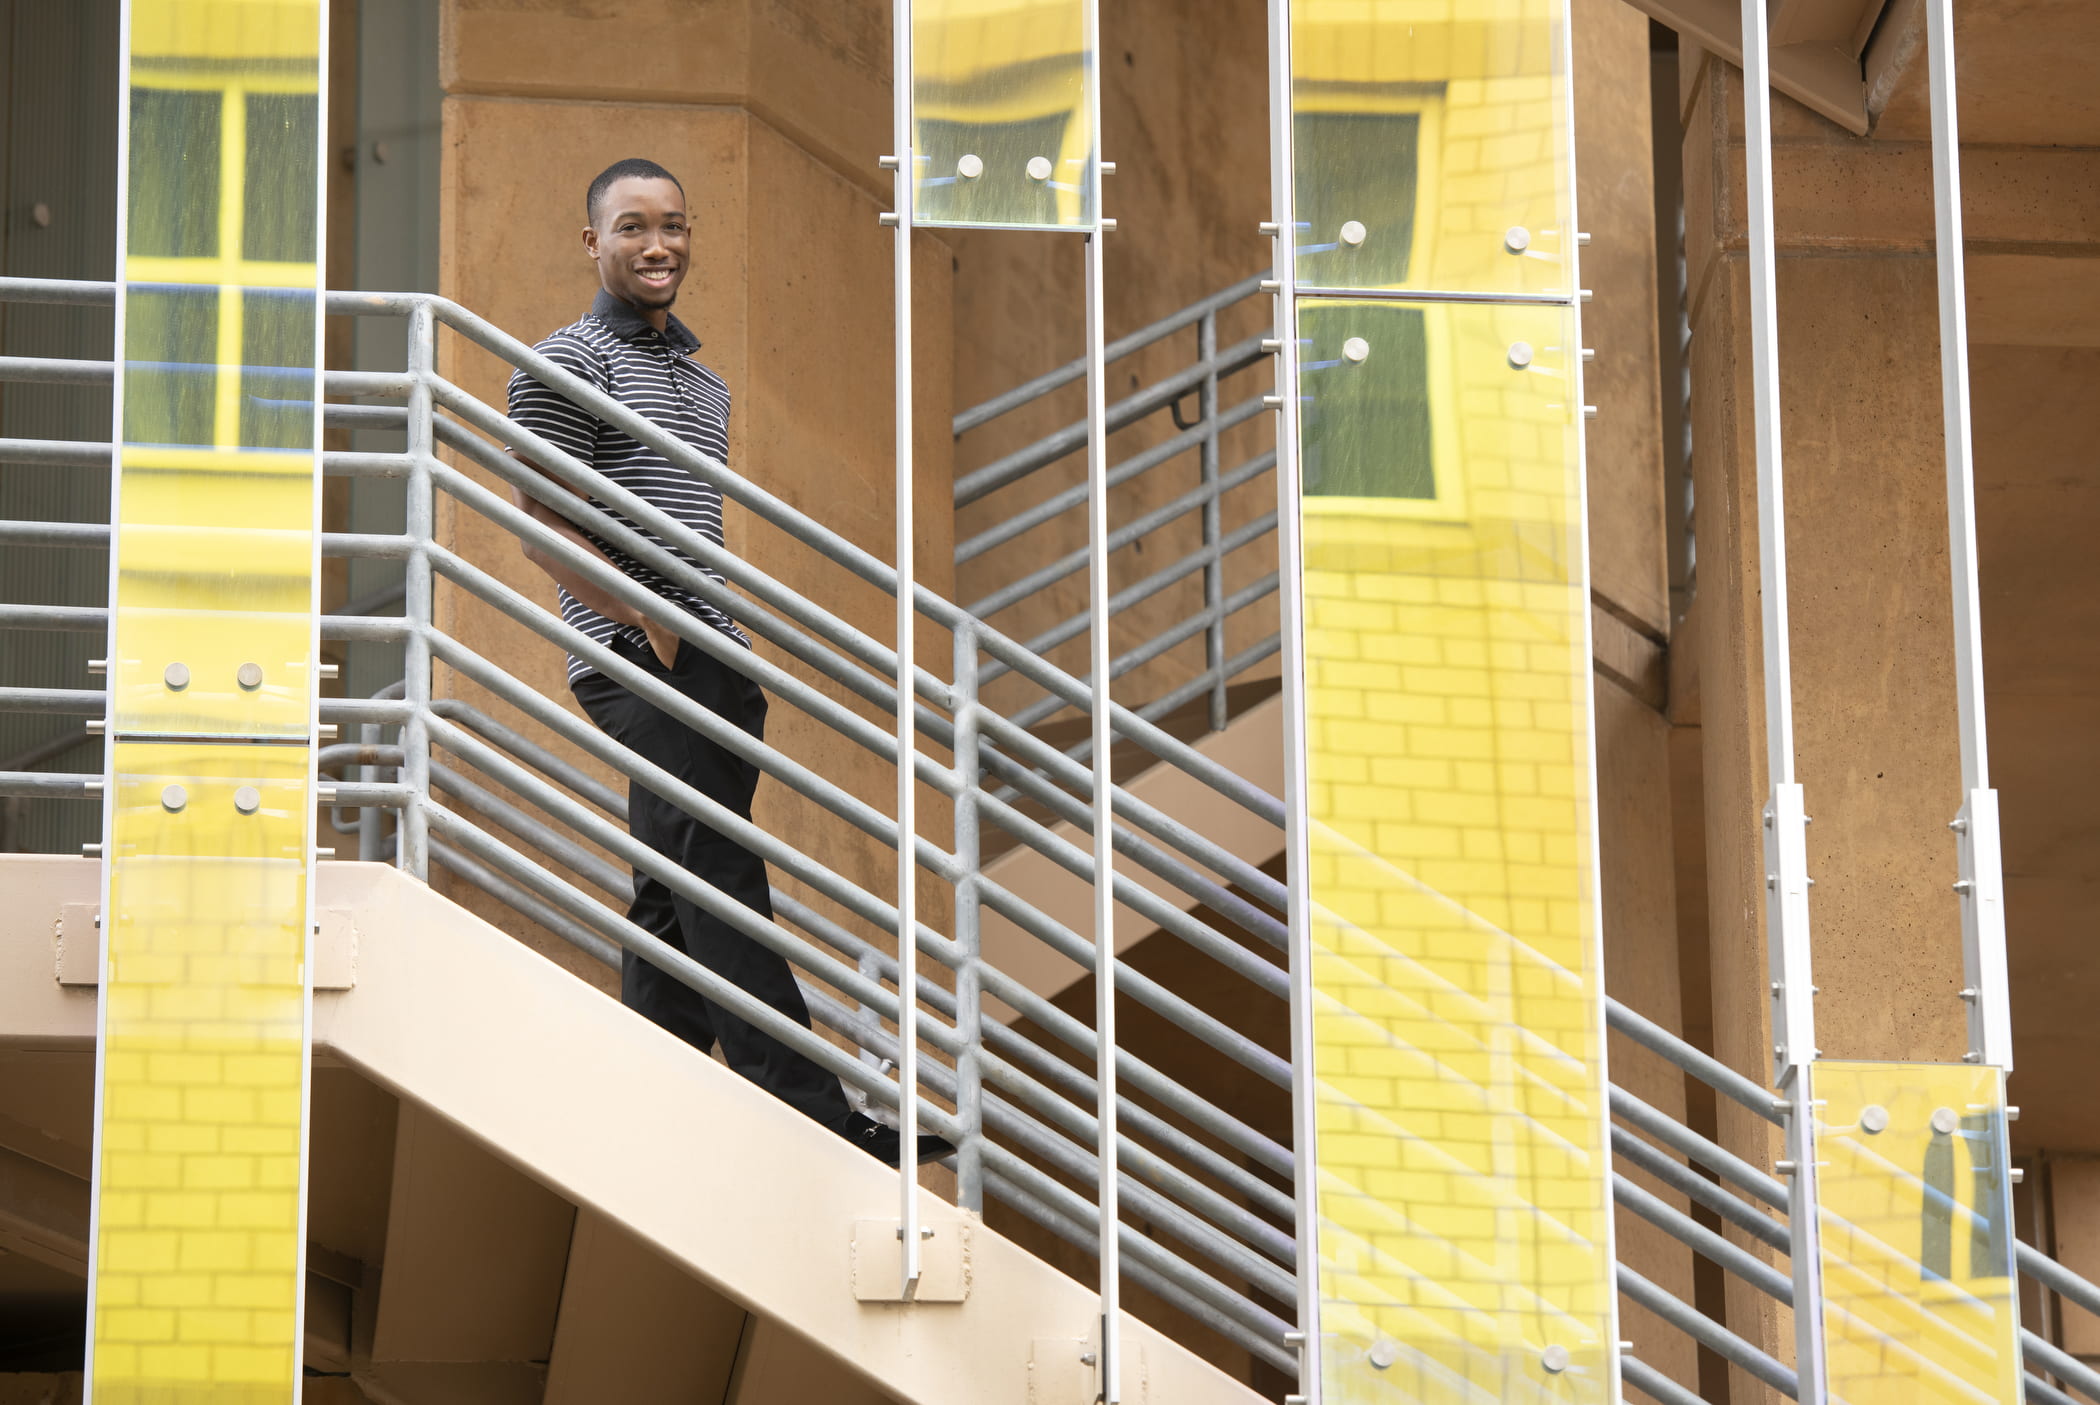 David Sanusi, international studies major, standing on stairs.